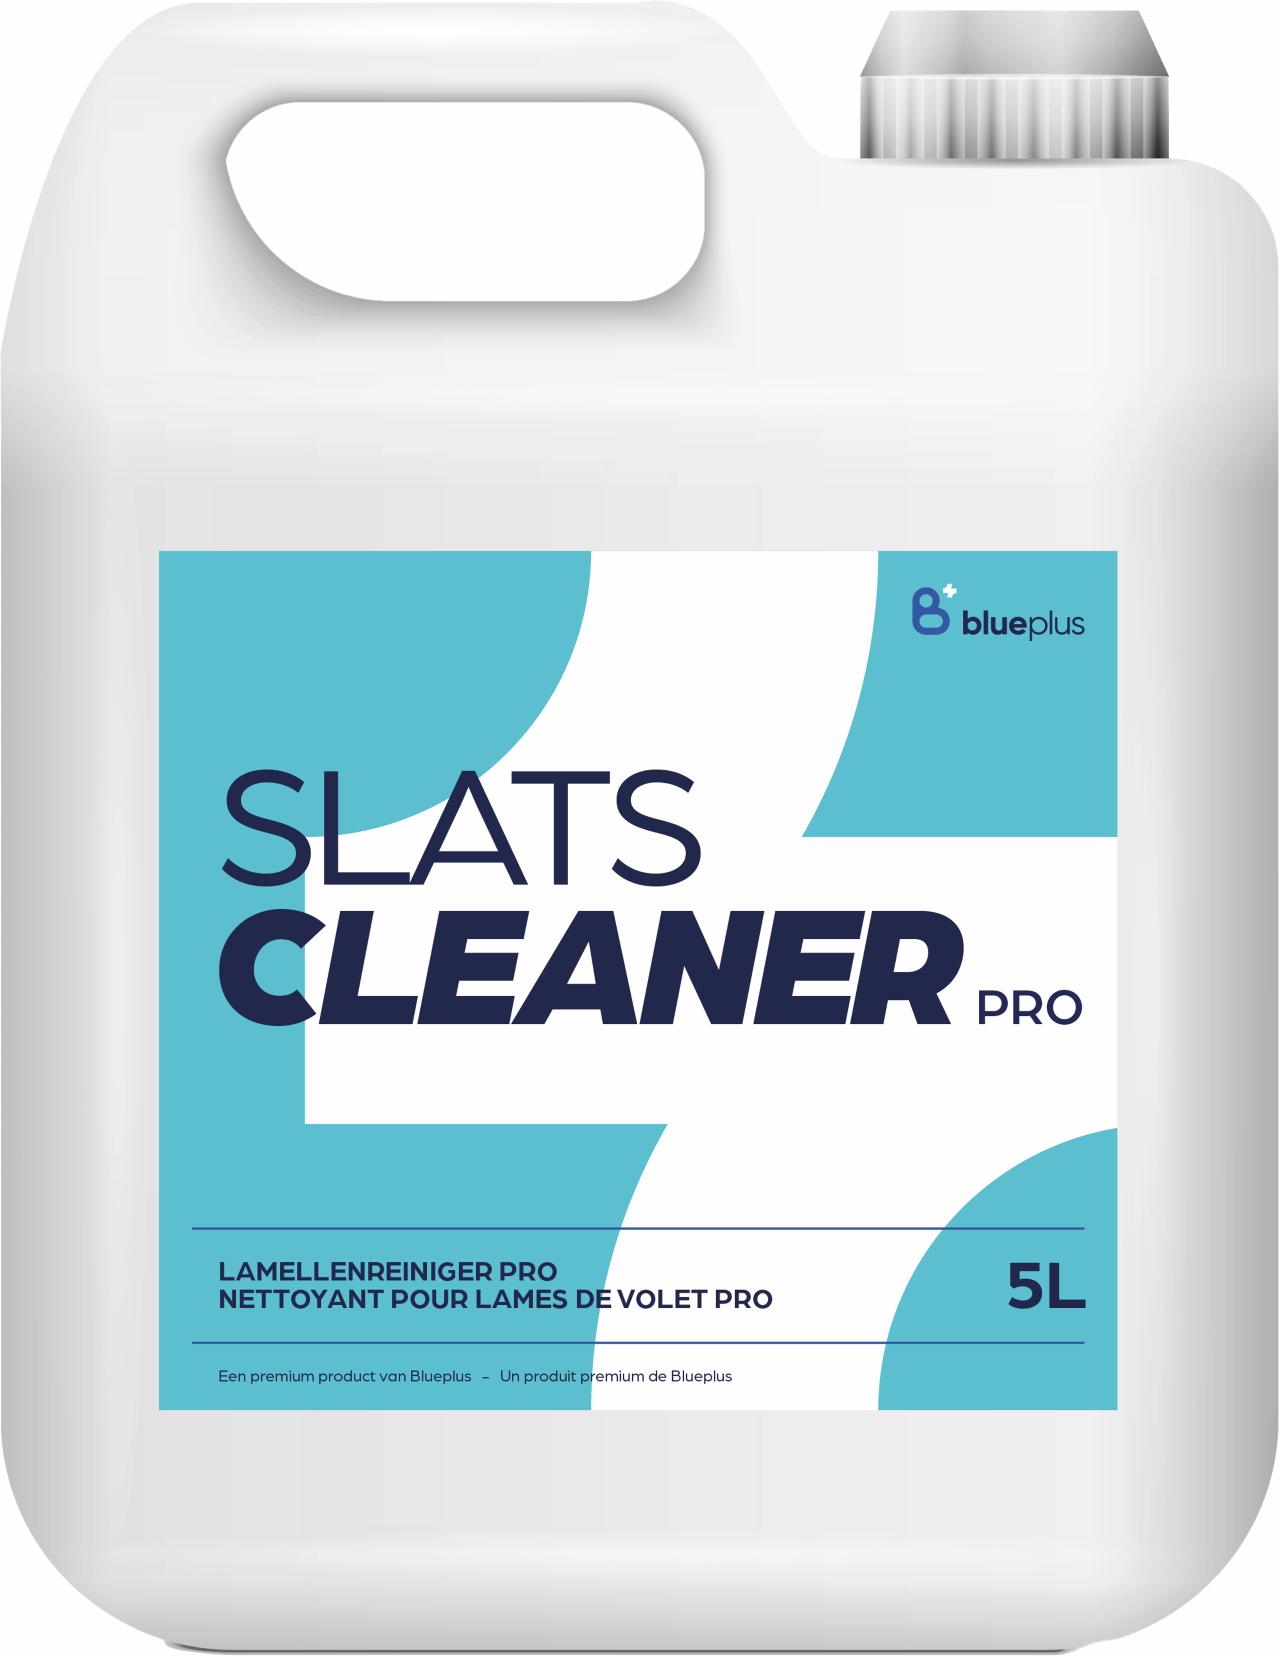 blueplus Slats Cleaner Pro 5l